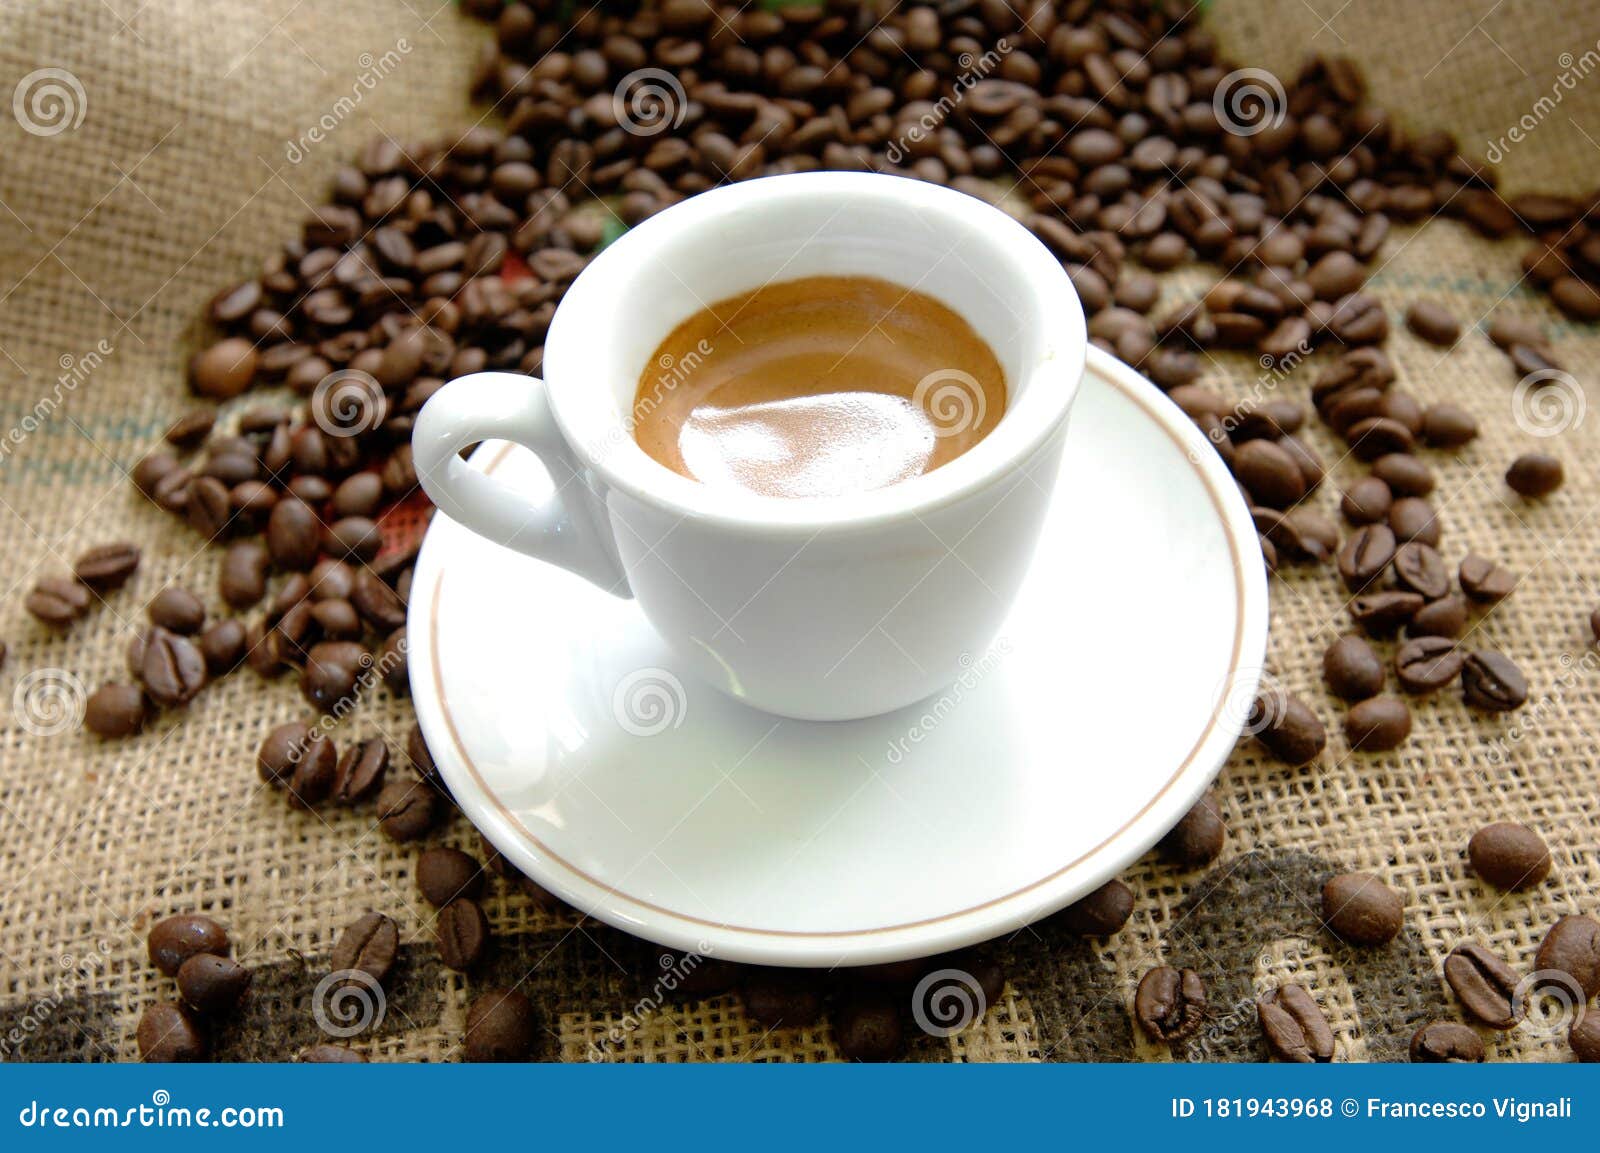 italian espresso cup near coffee beans on a yute sack